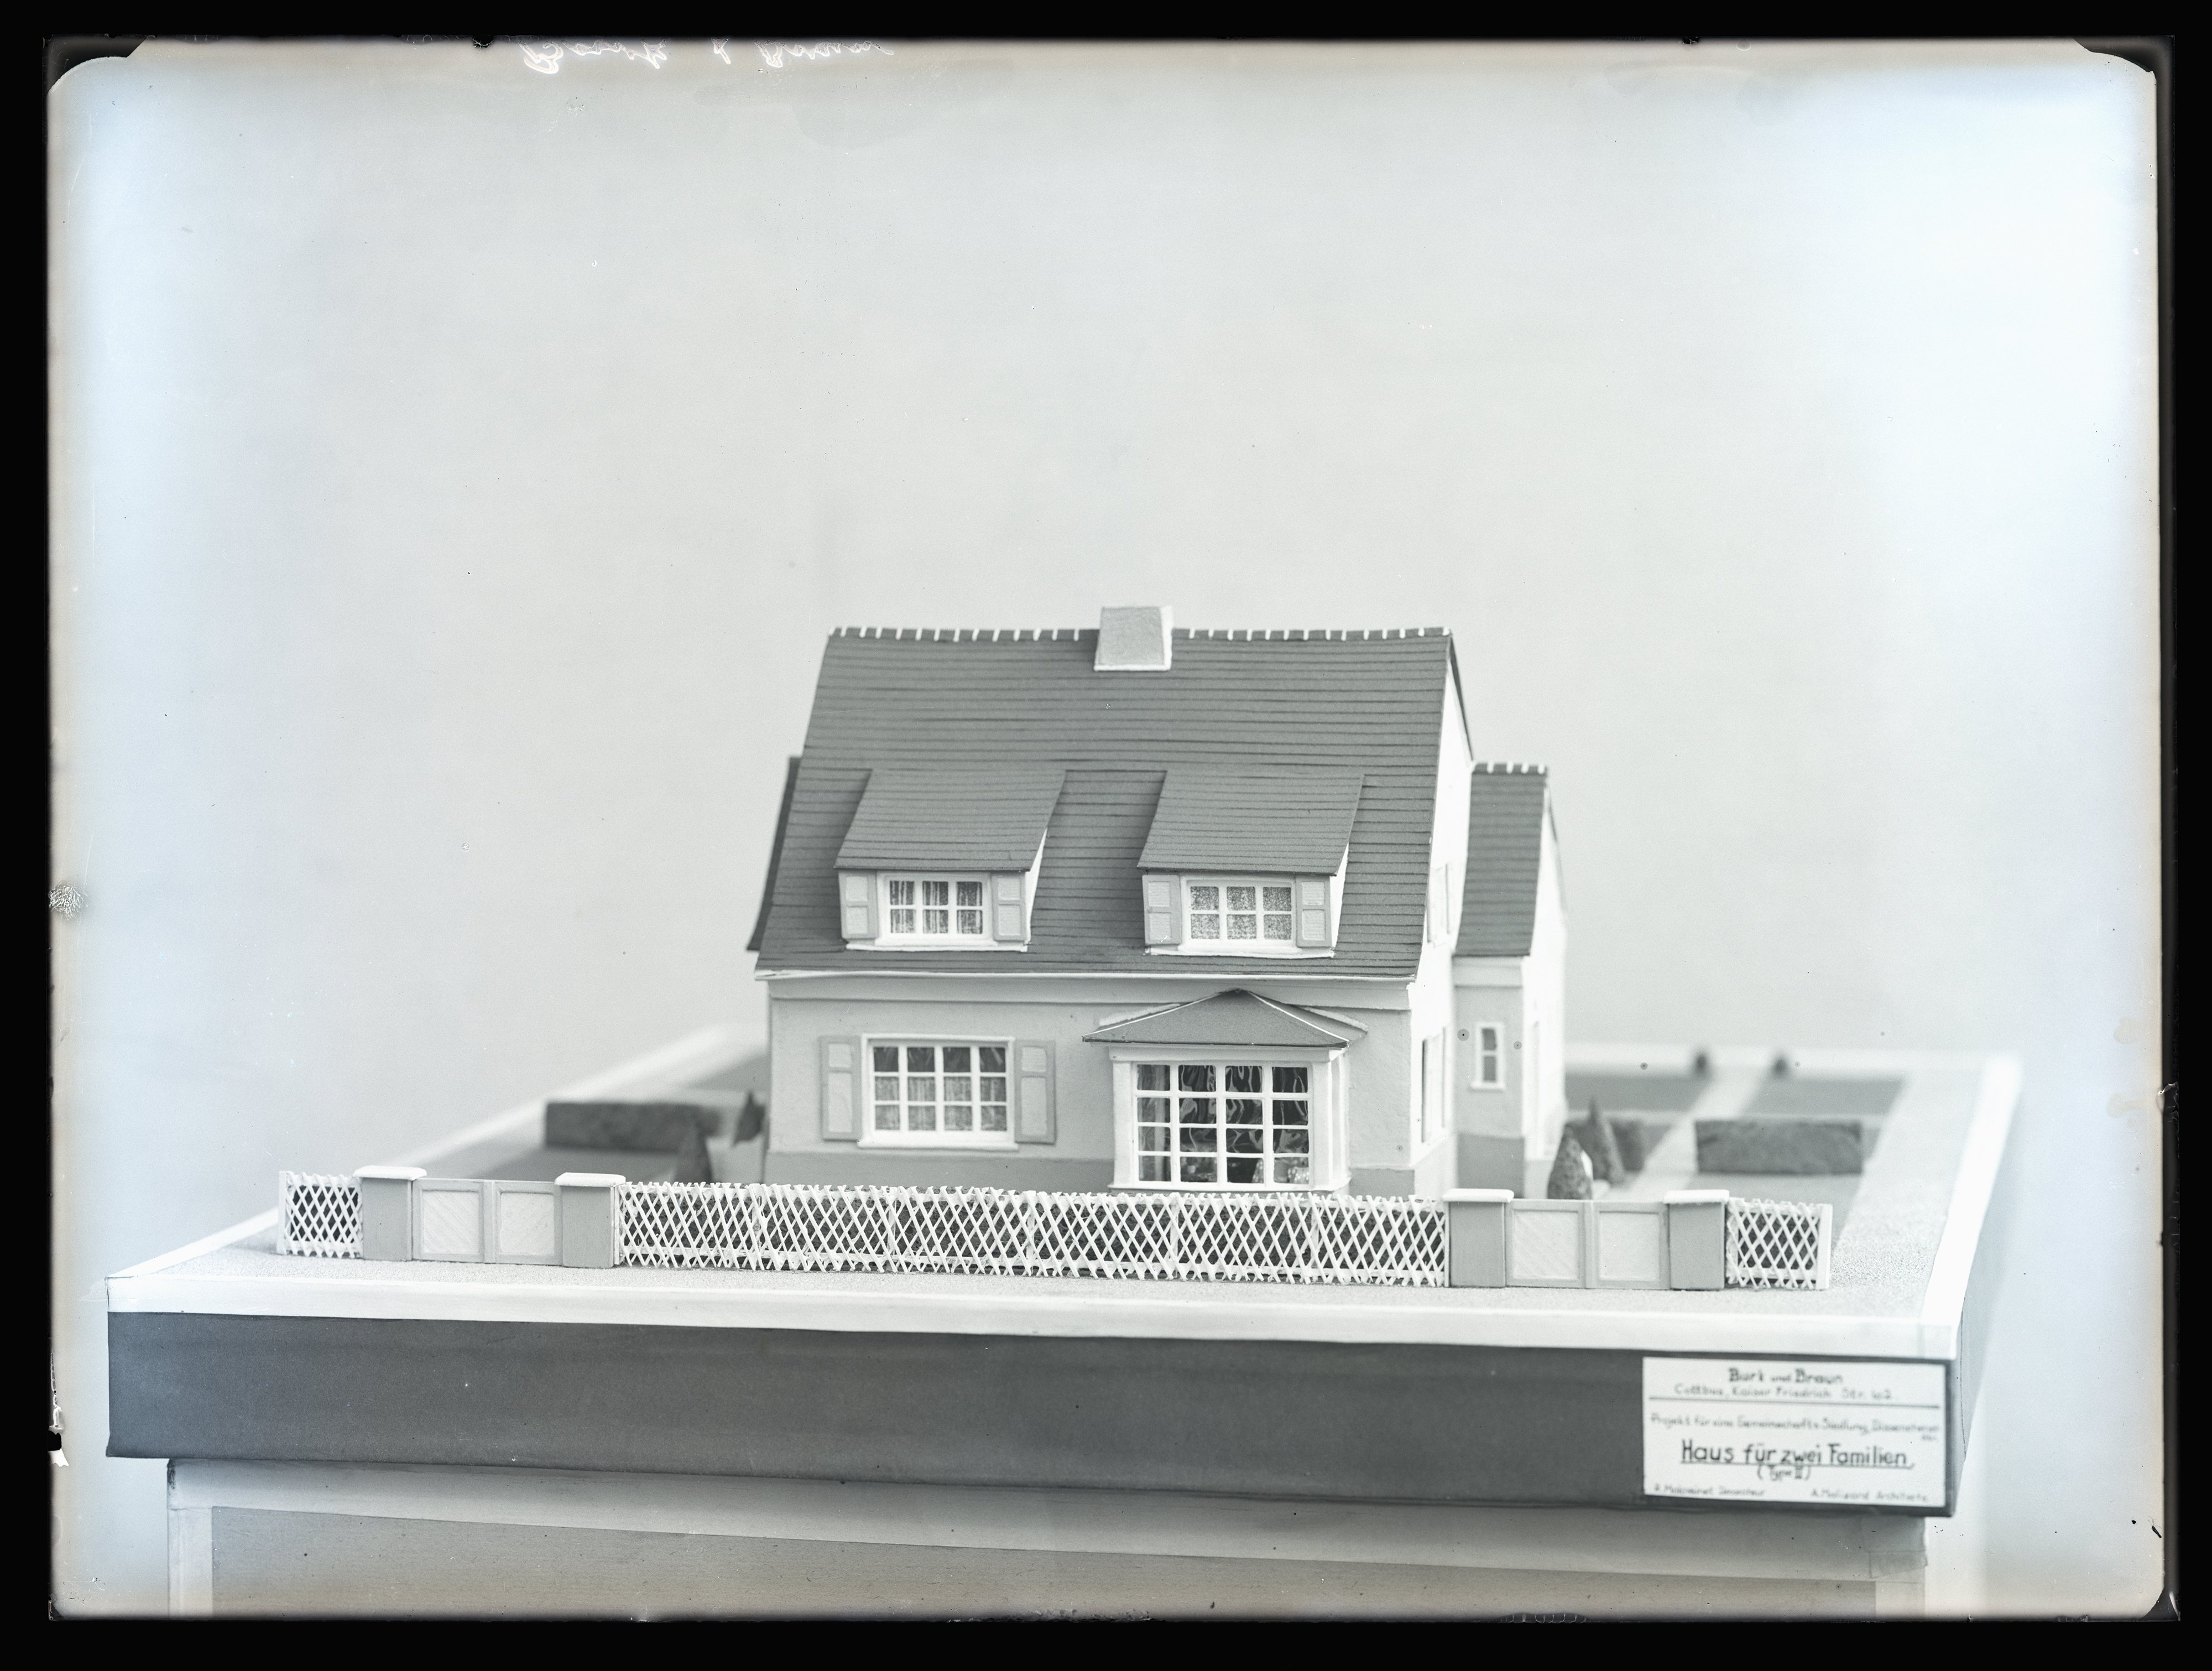 Burk & Braun, Kakao- und Schokoladenfabrik - Architekturmodell (Stadtmuseum Cottbus CC BY-NC-SA)